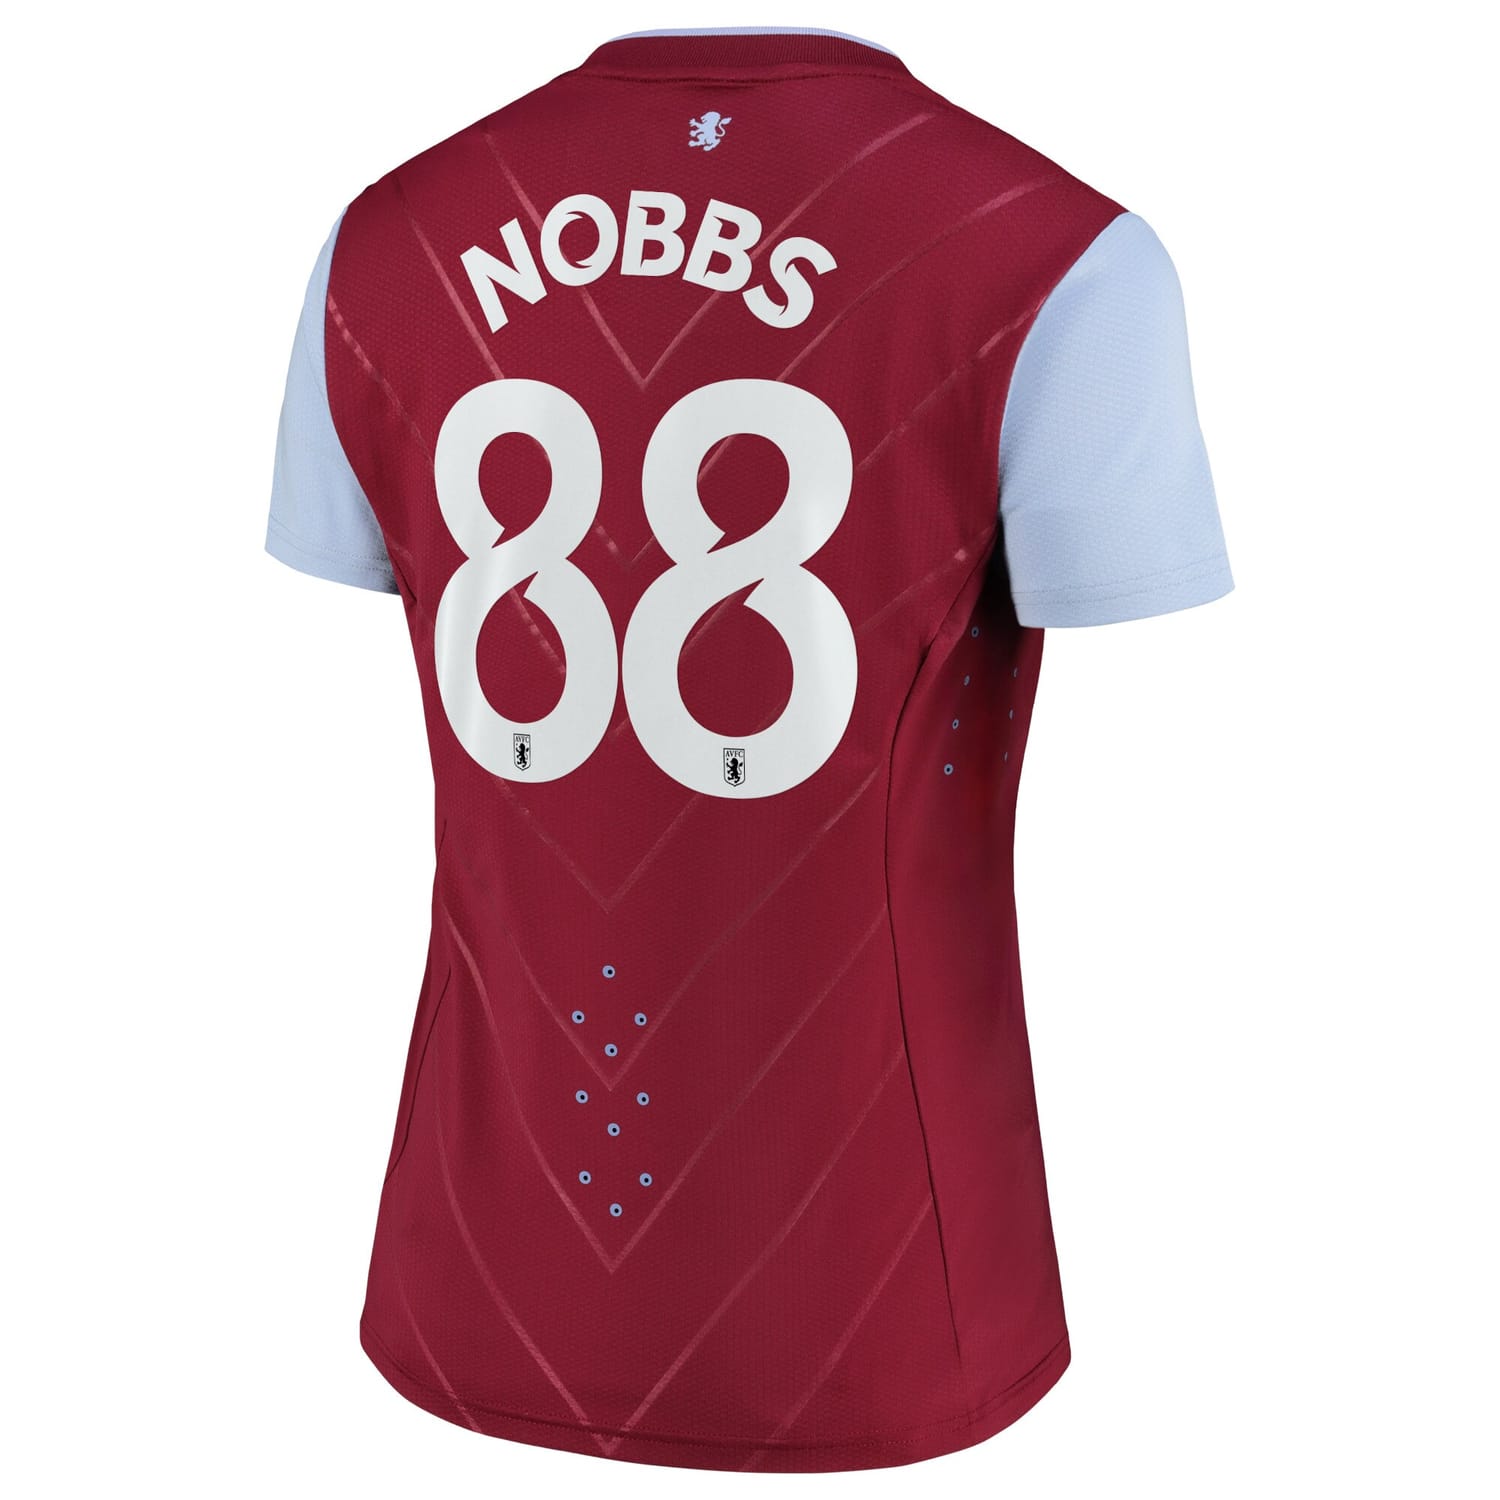 Premier League Aston Villa Home Cup Pro Jersey Shirt 2022-23 player Jordan Nobbs 88 printing for Women